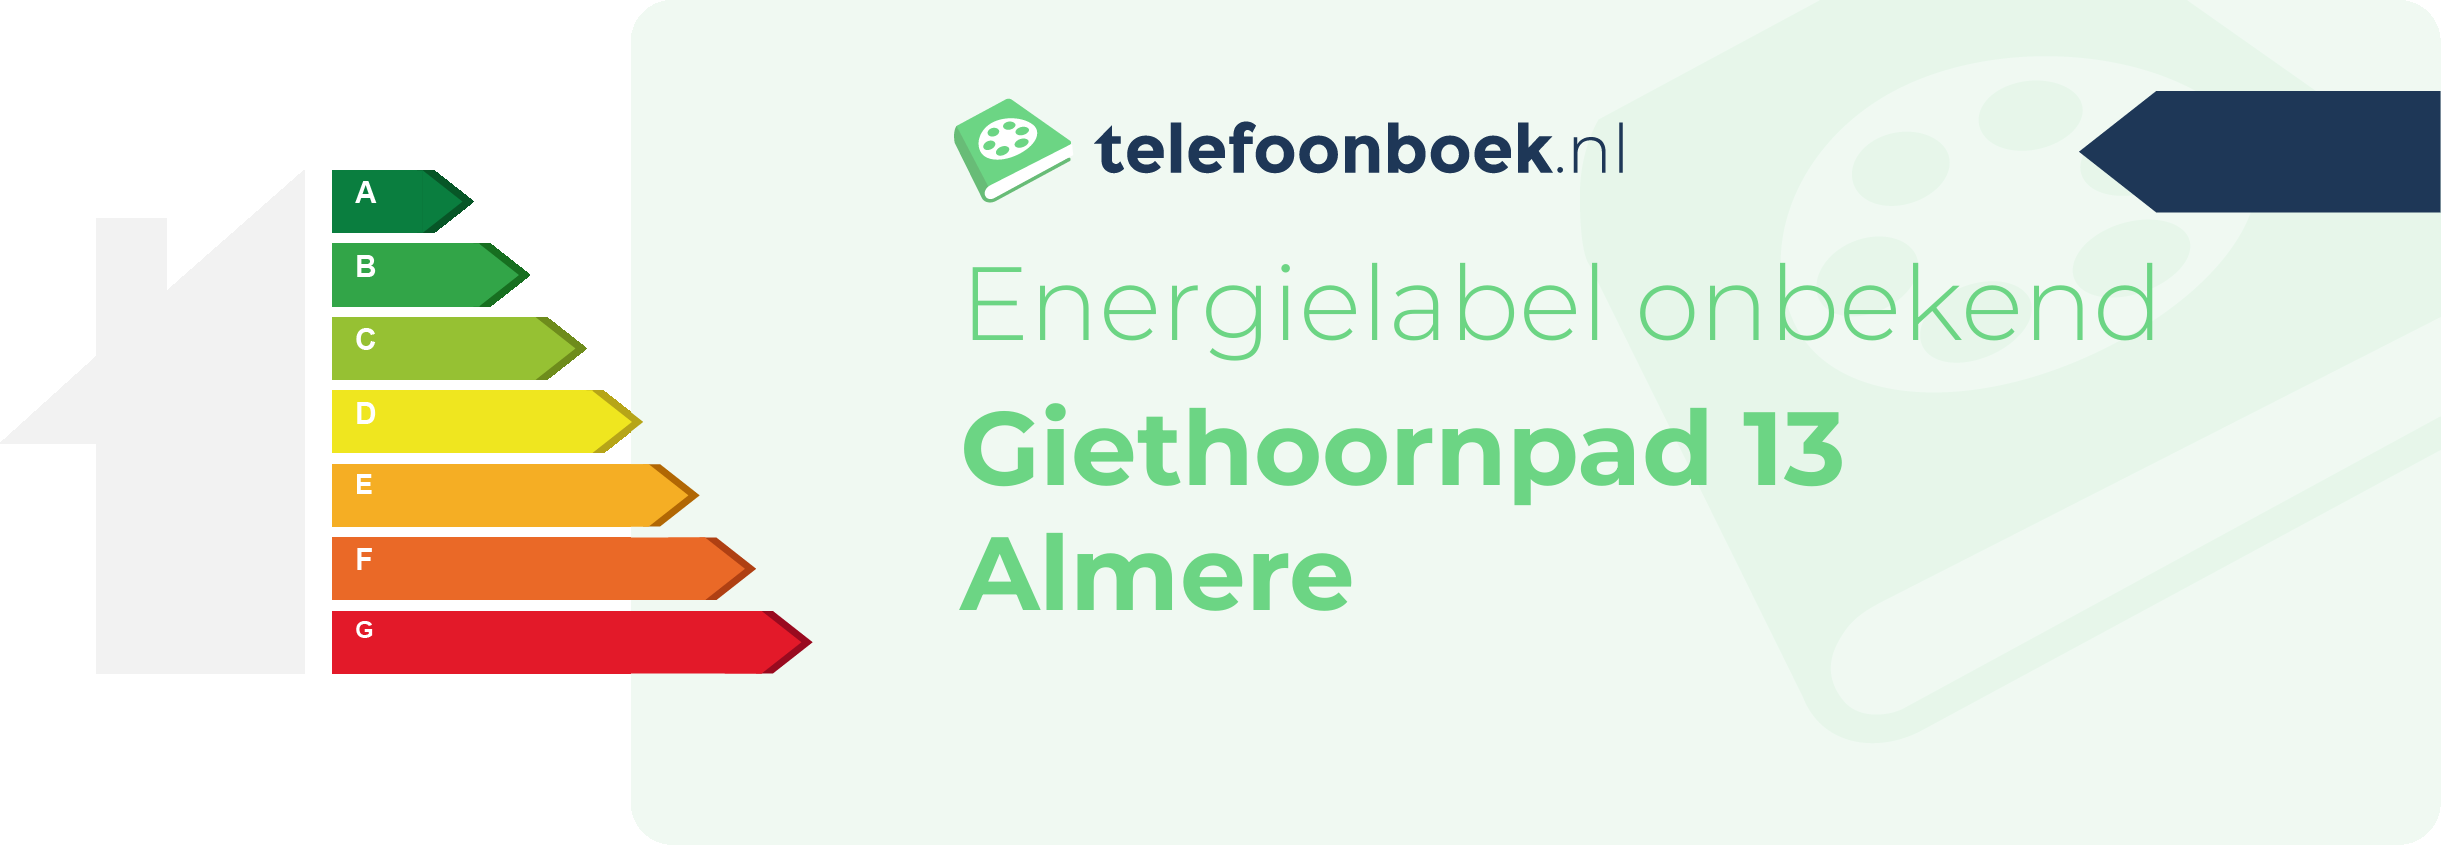 Energielabel Giethoornpad 13 Almere